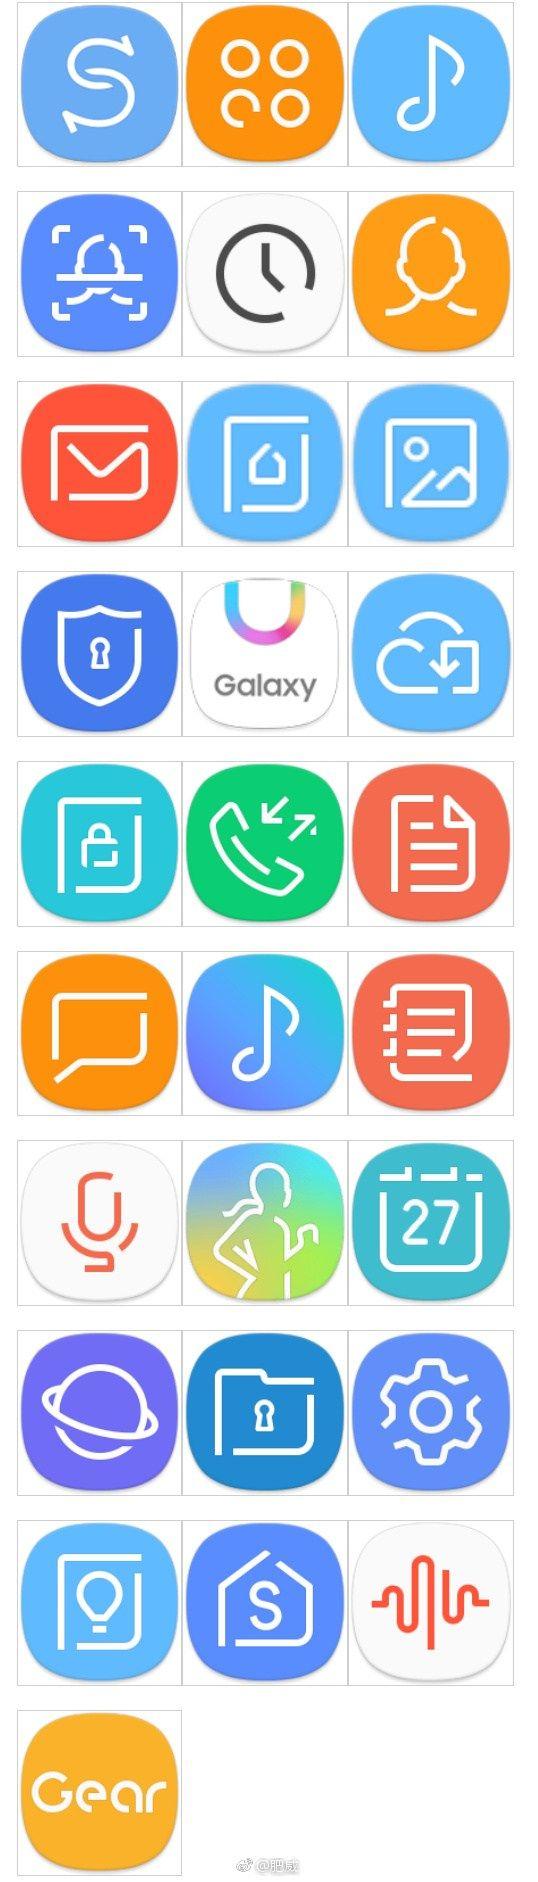 Samsung Phone App Logo - Samsung Galaxy S8 UI Screenshots And App Icons Leak – AndroidPure